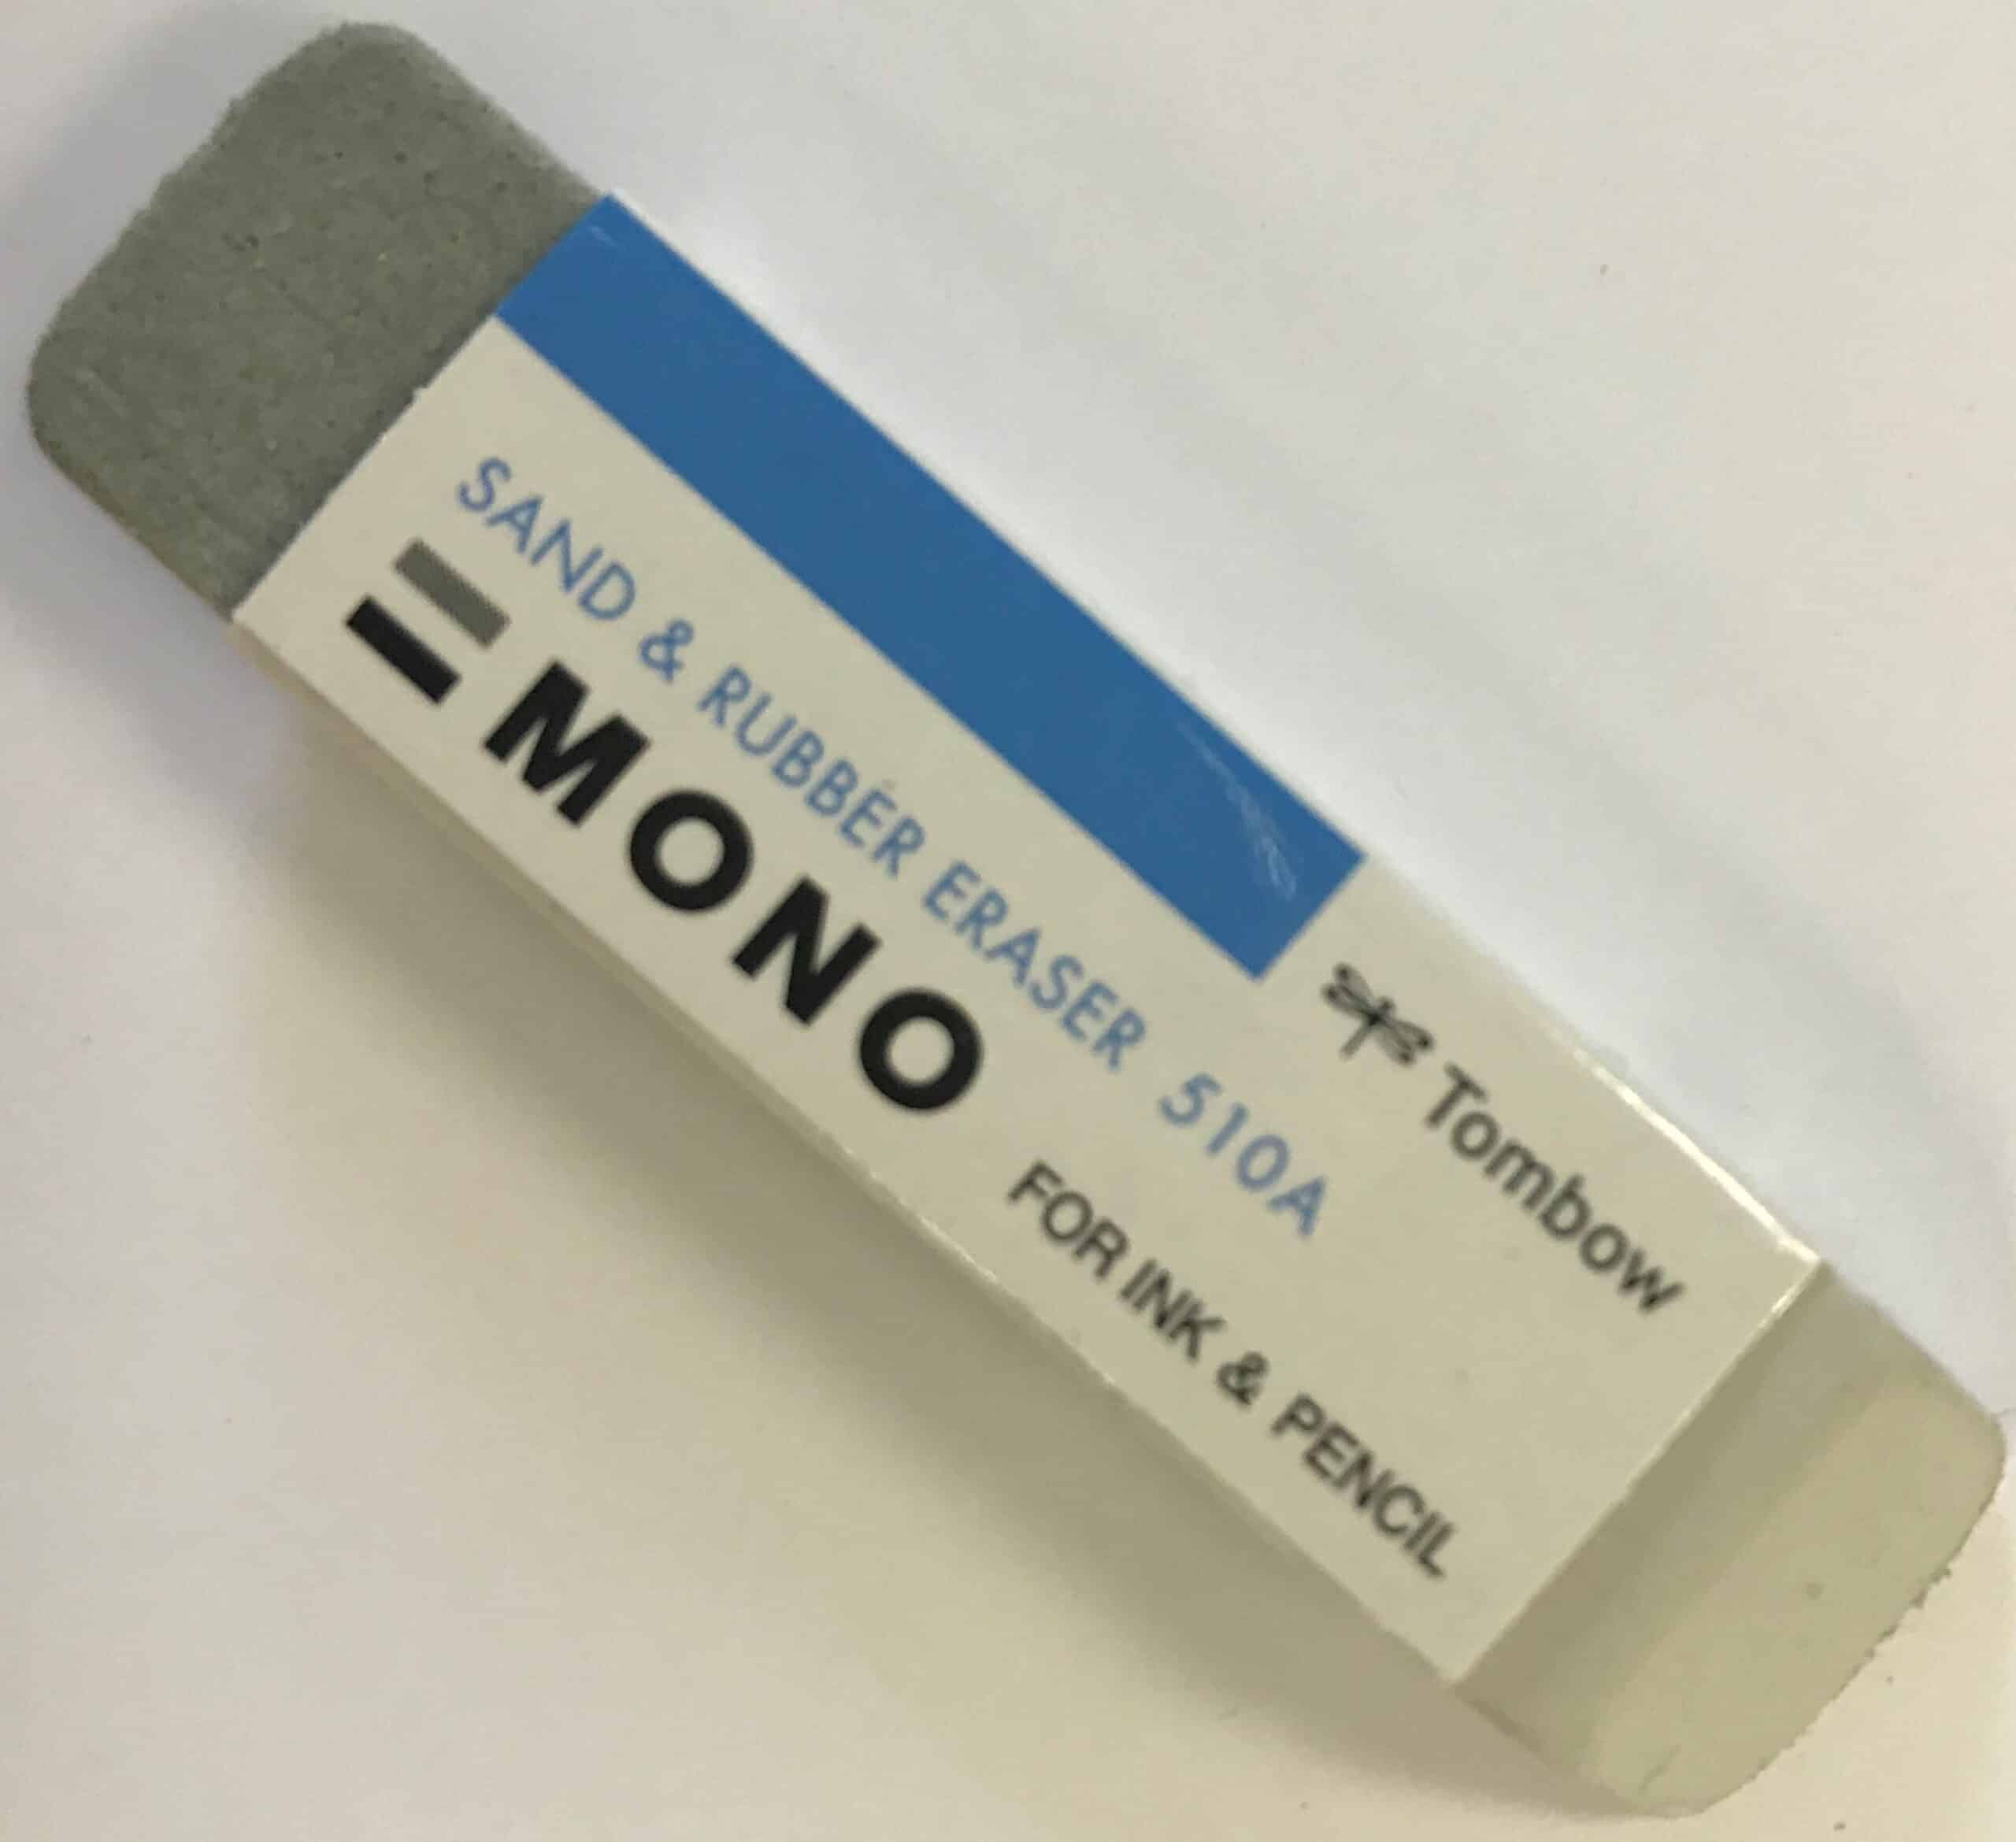 Tombow Mono 510A Sand & Rubber Eraser